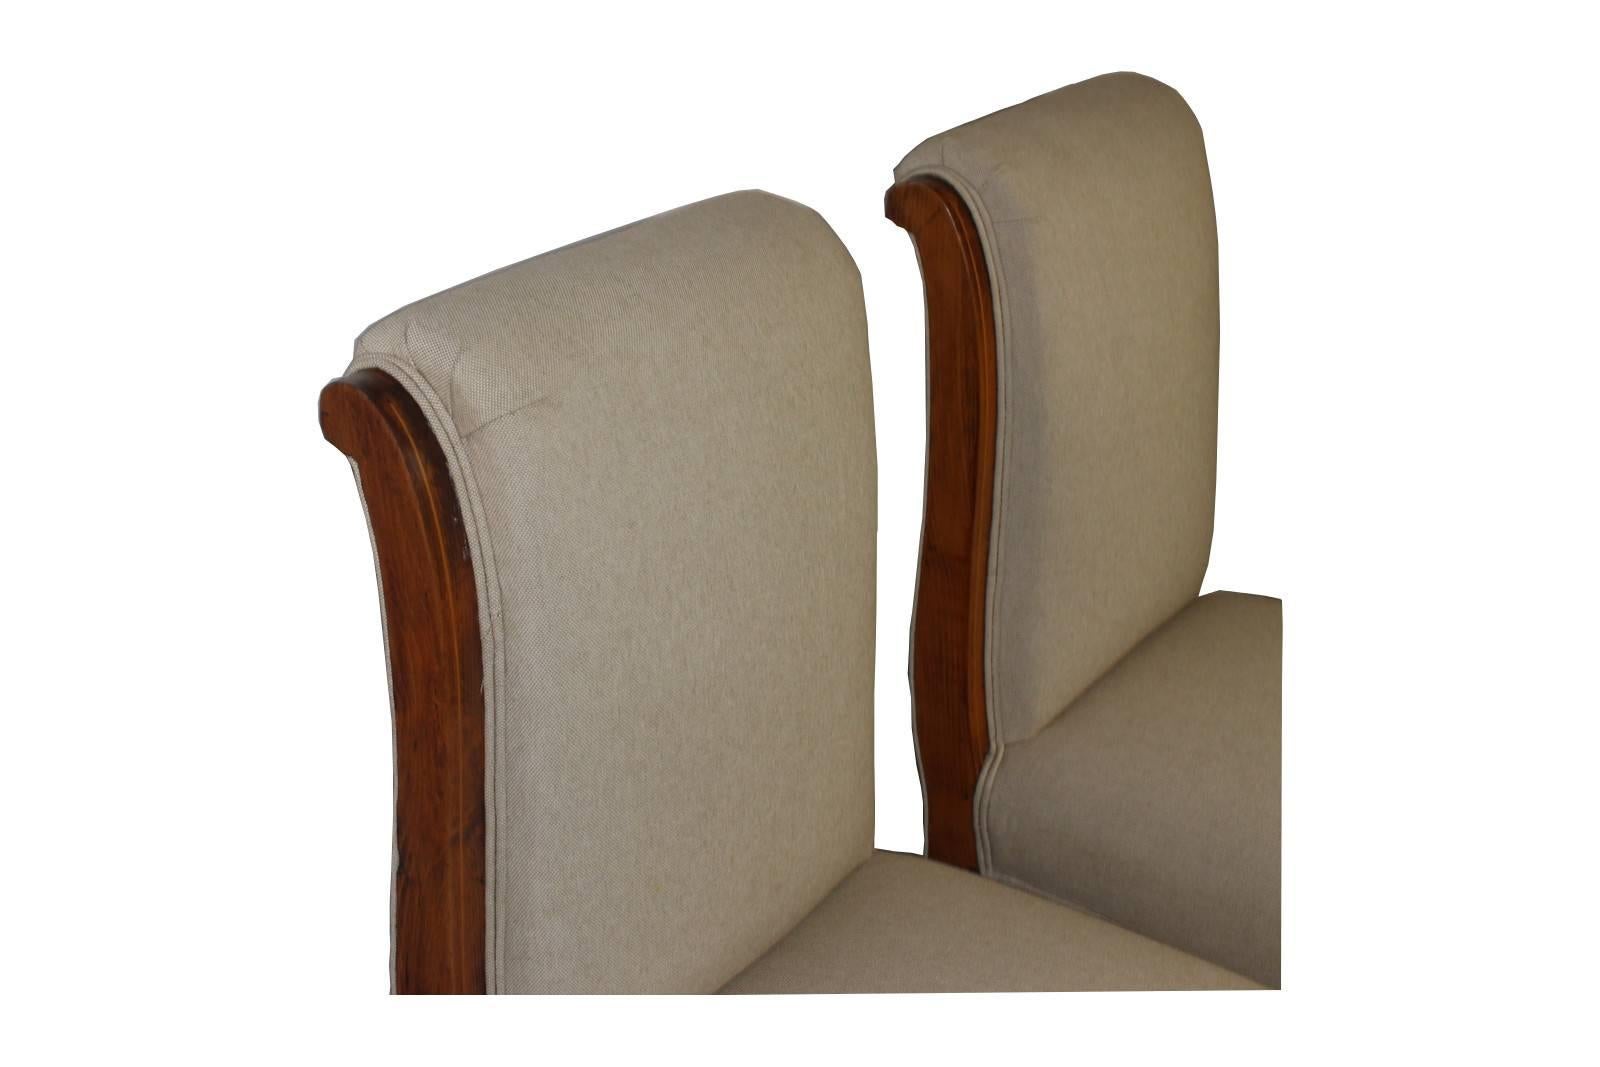 Late 19th Century Pair of Biedermeier Style Chairs